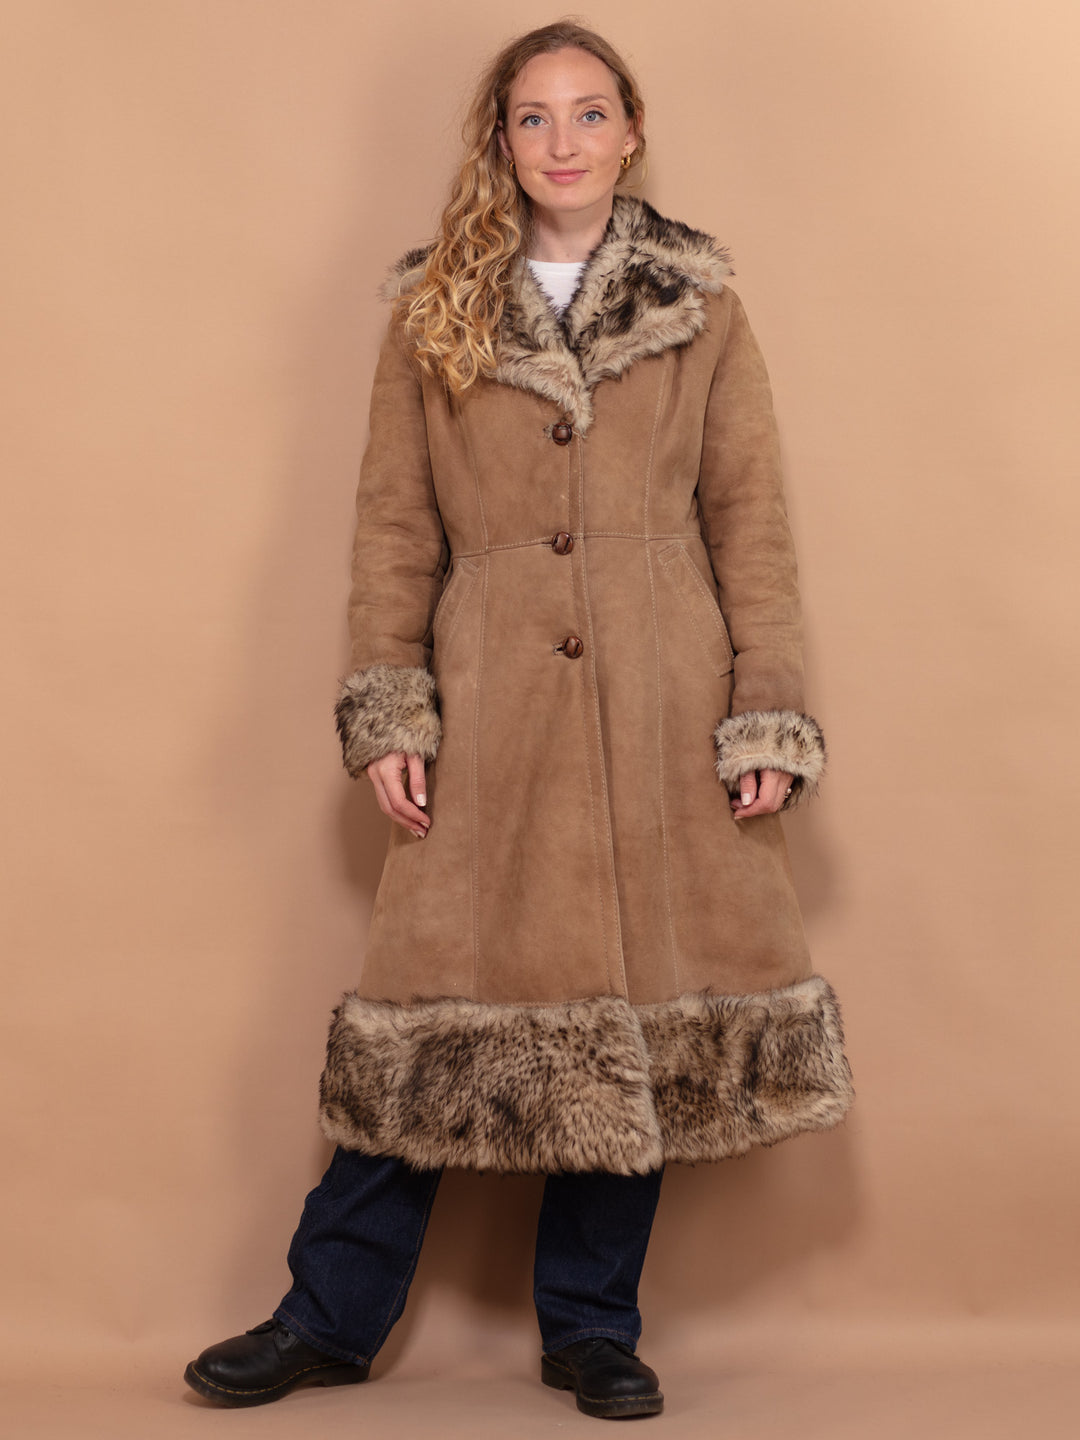 Penny Lane Coat 70's, Size Small XS, Luxurious Shearl Coat, Sheepskin Suede Shearling Wool, Boho Hippie Overcoat, Penny Lane Fur Coat